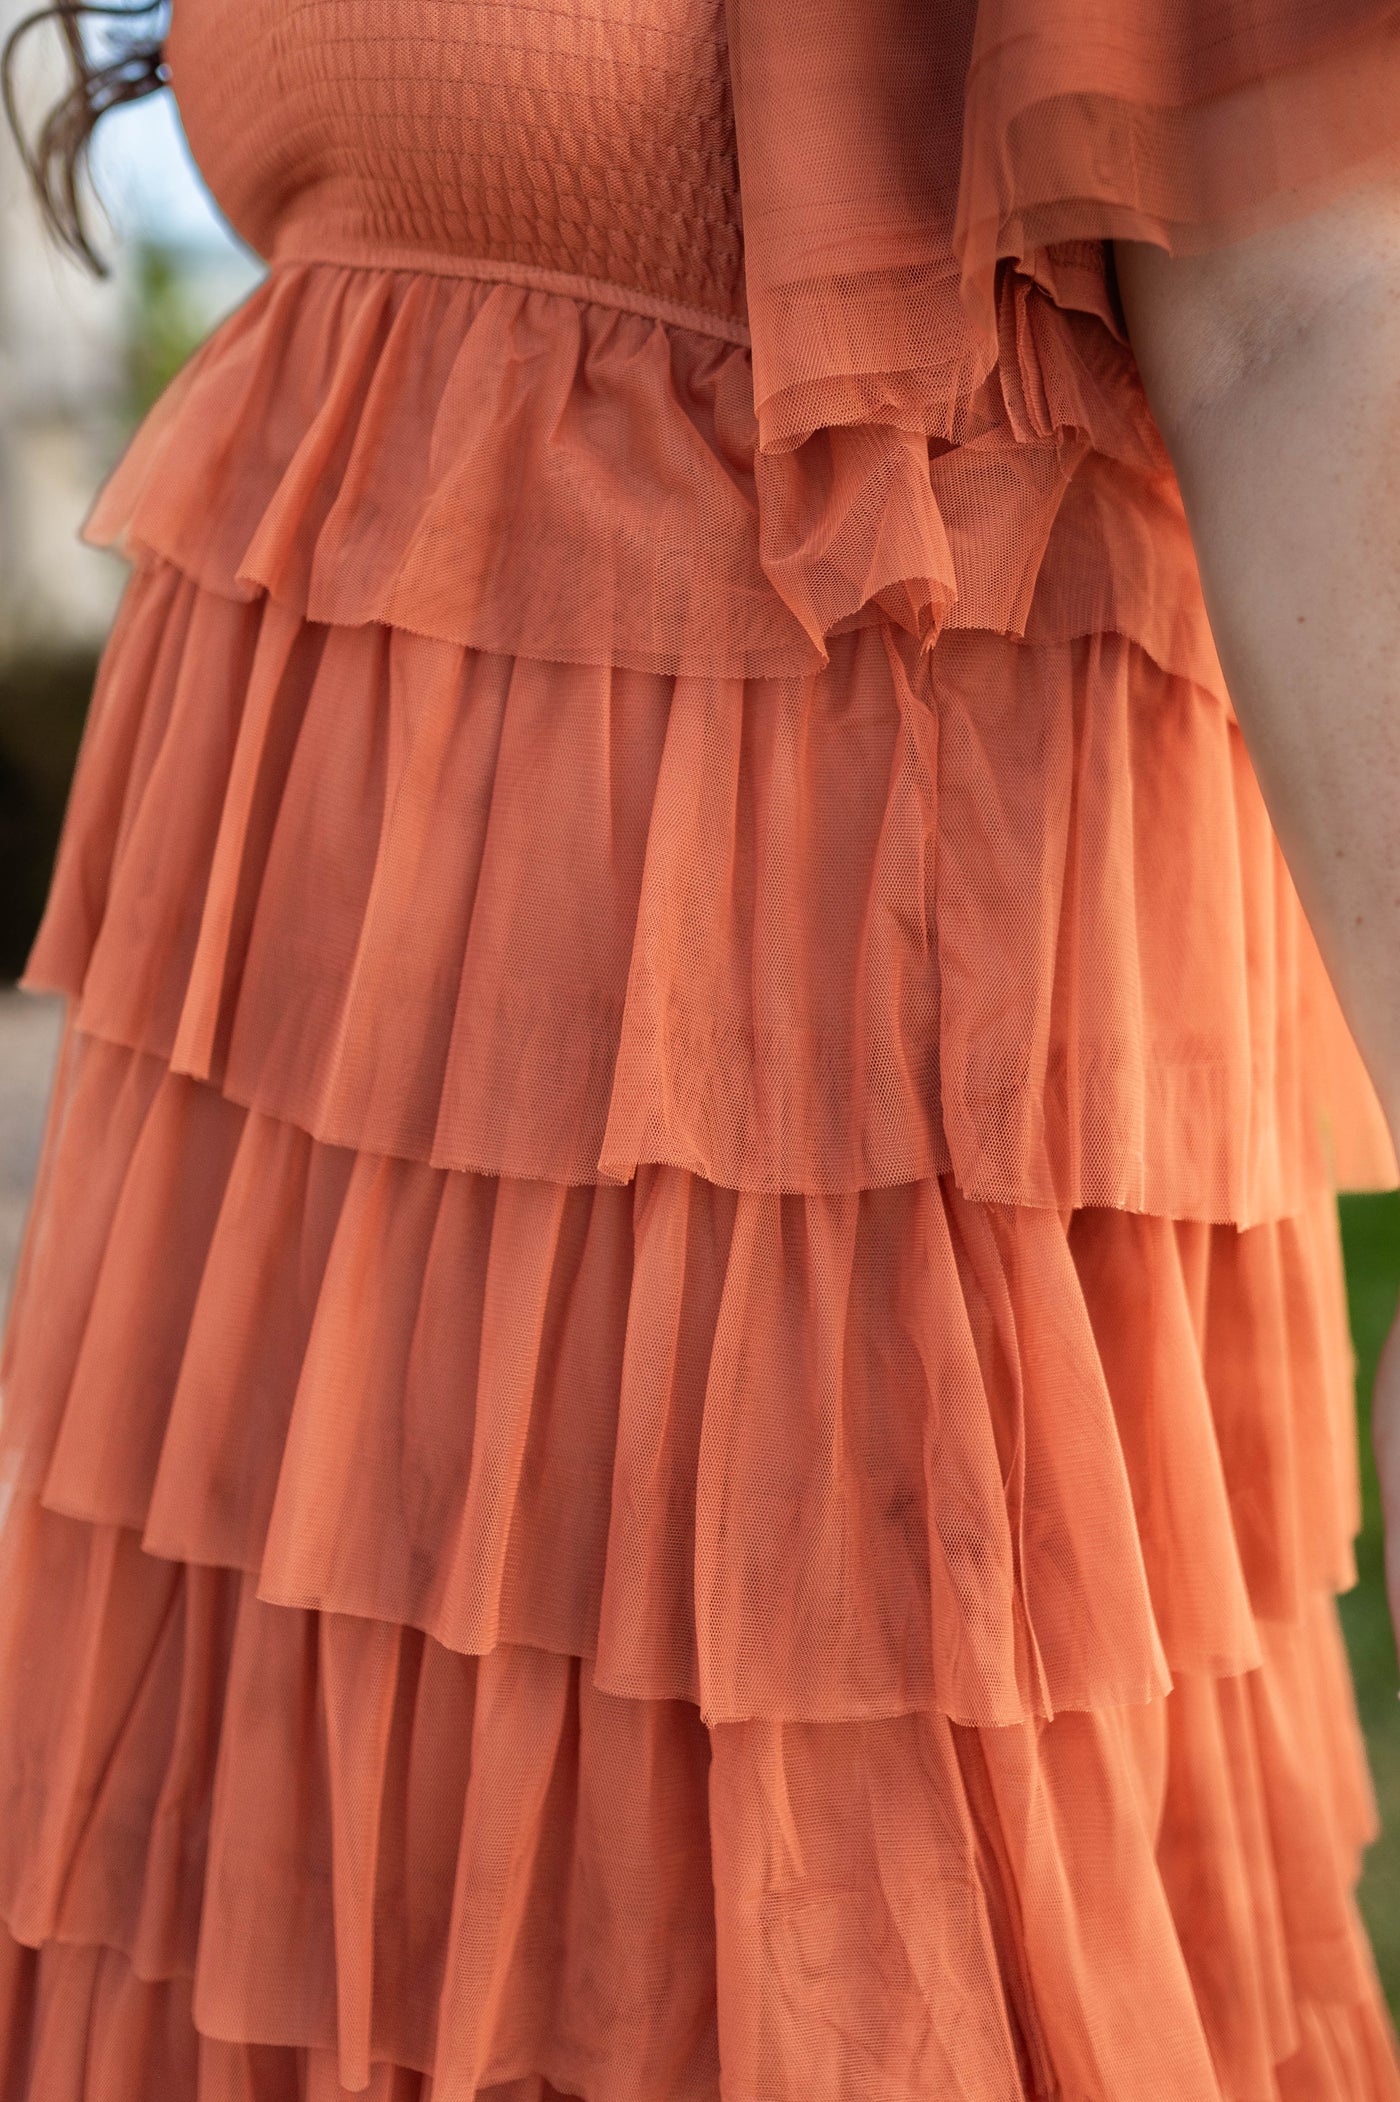 Ruffle skirt of a plus size rust dress